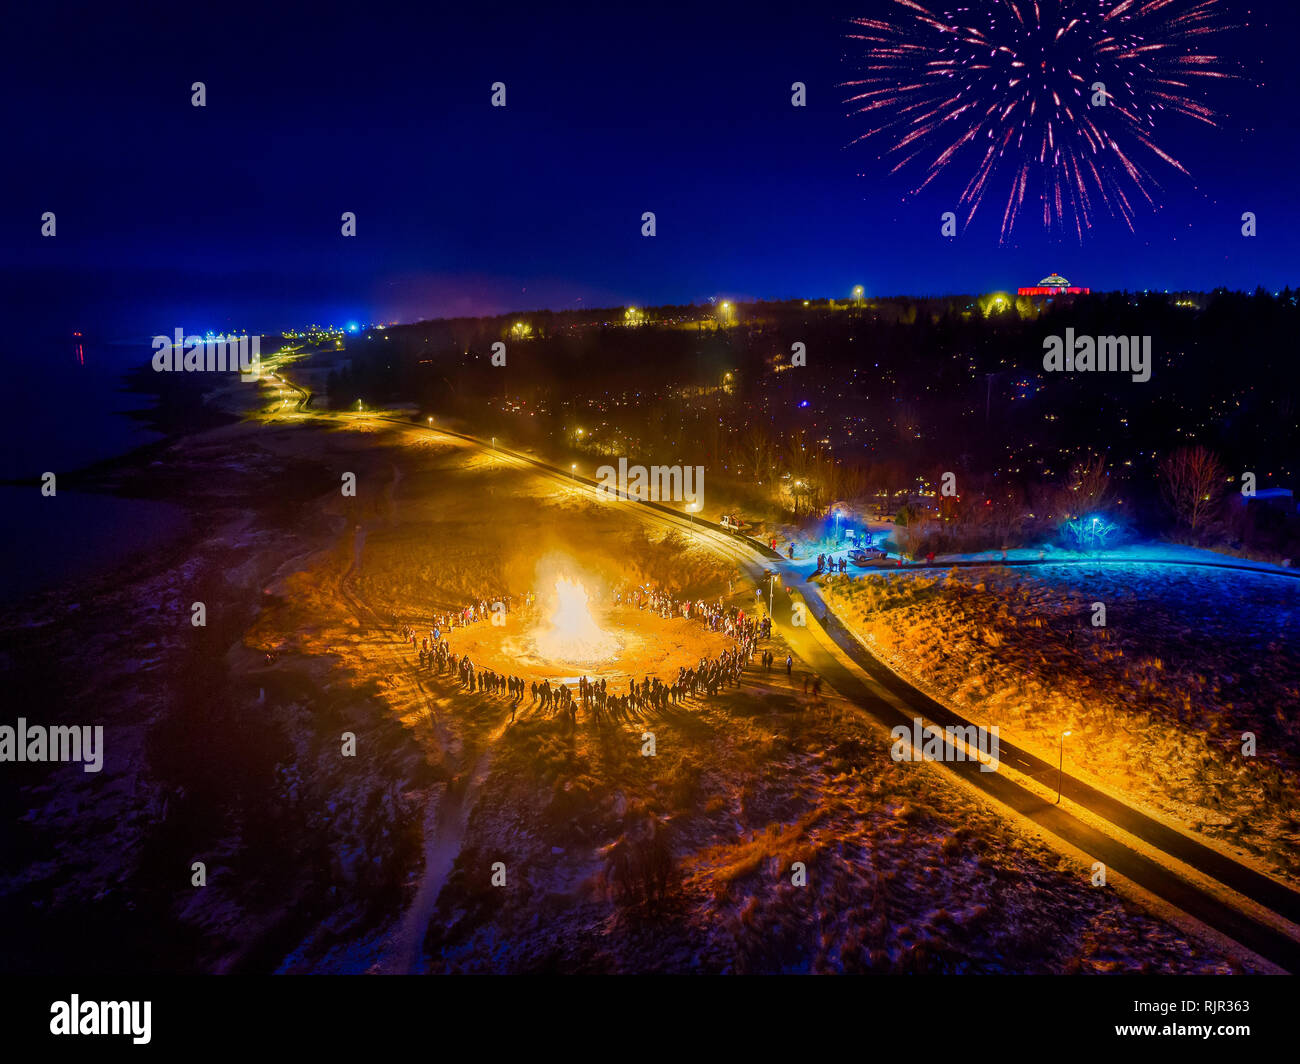 New Year's Eve Celebrations with bonfires and fireworks, Reykjavik, Iceland Stock Photo